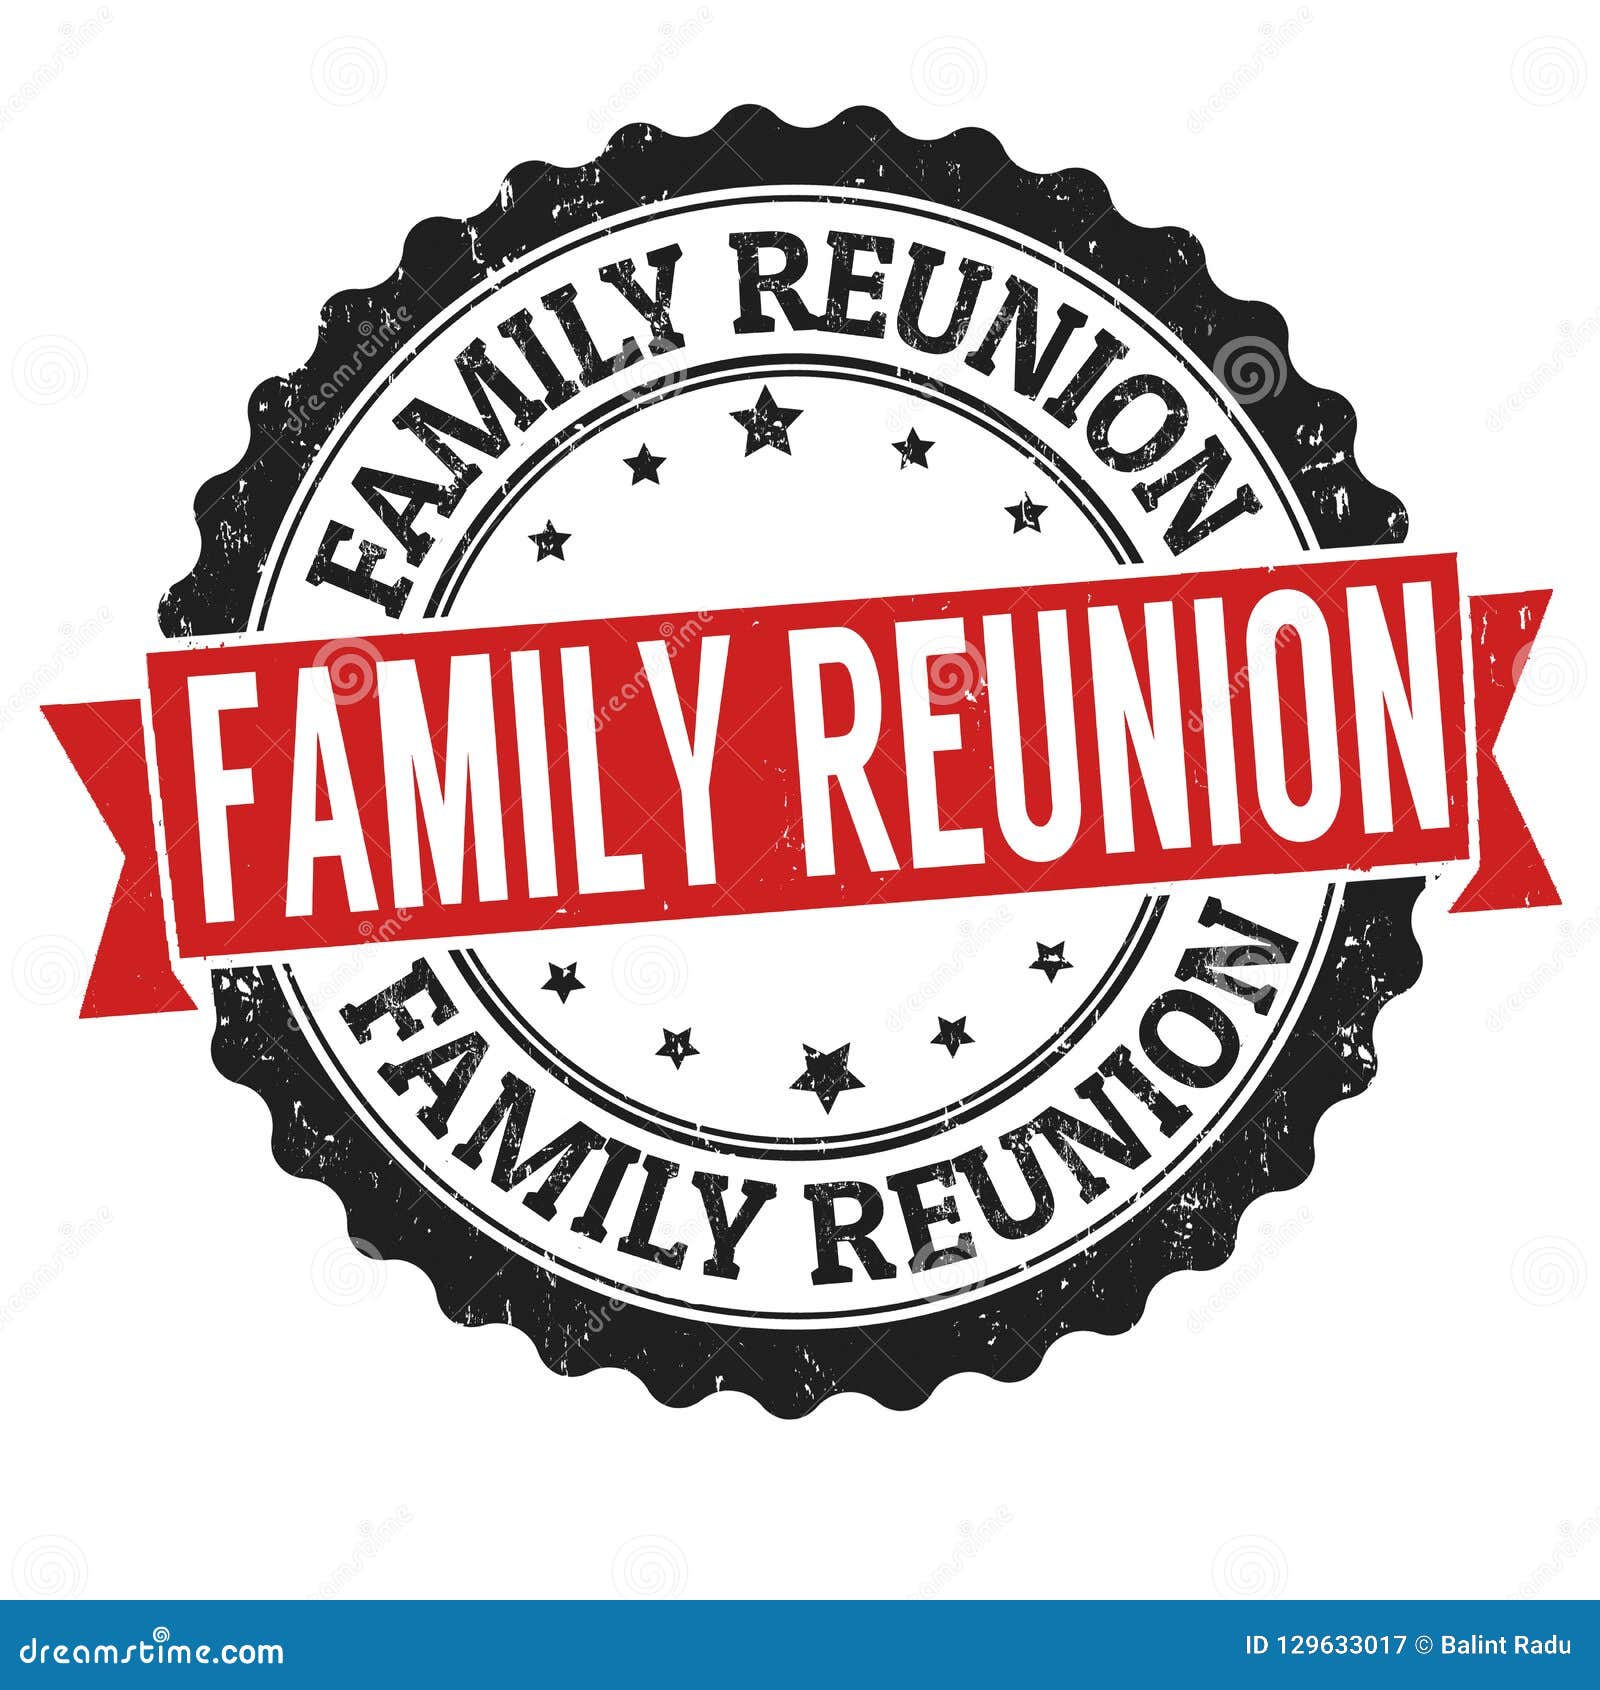 family reunion wallpaper